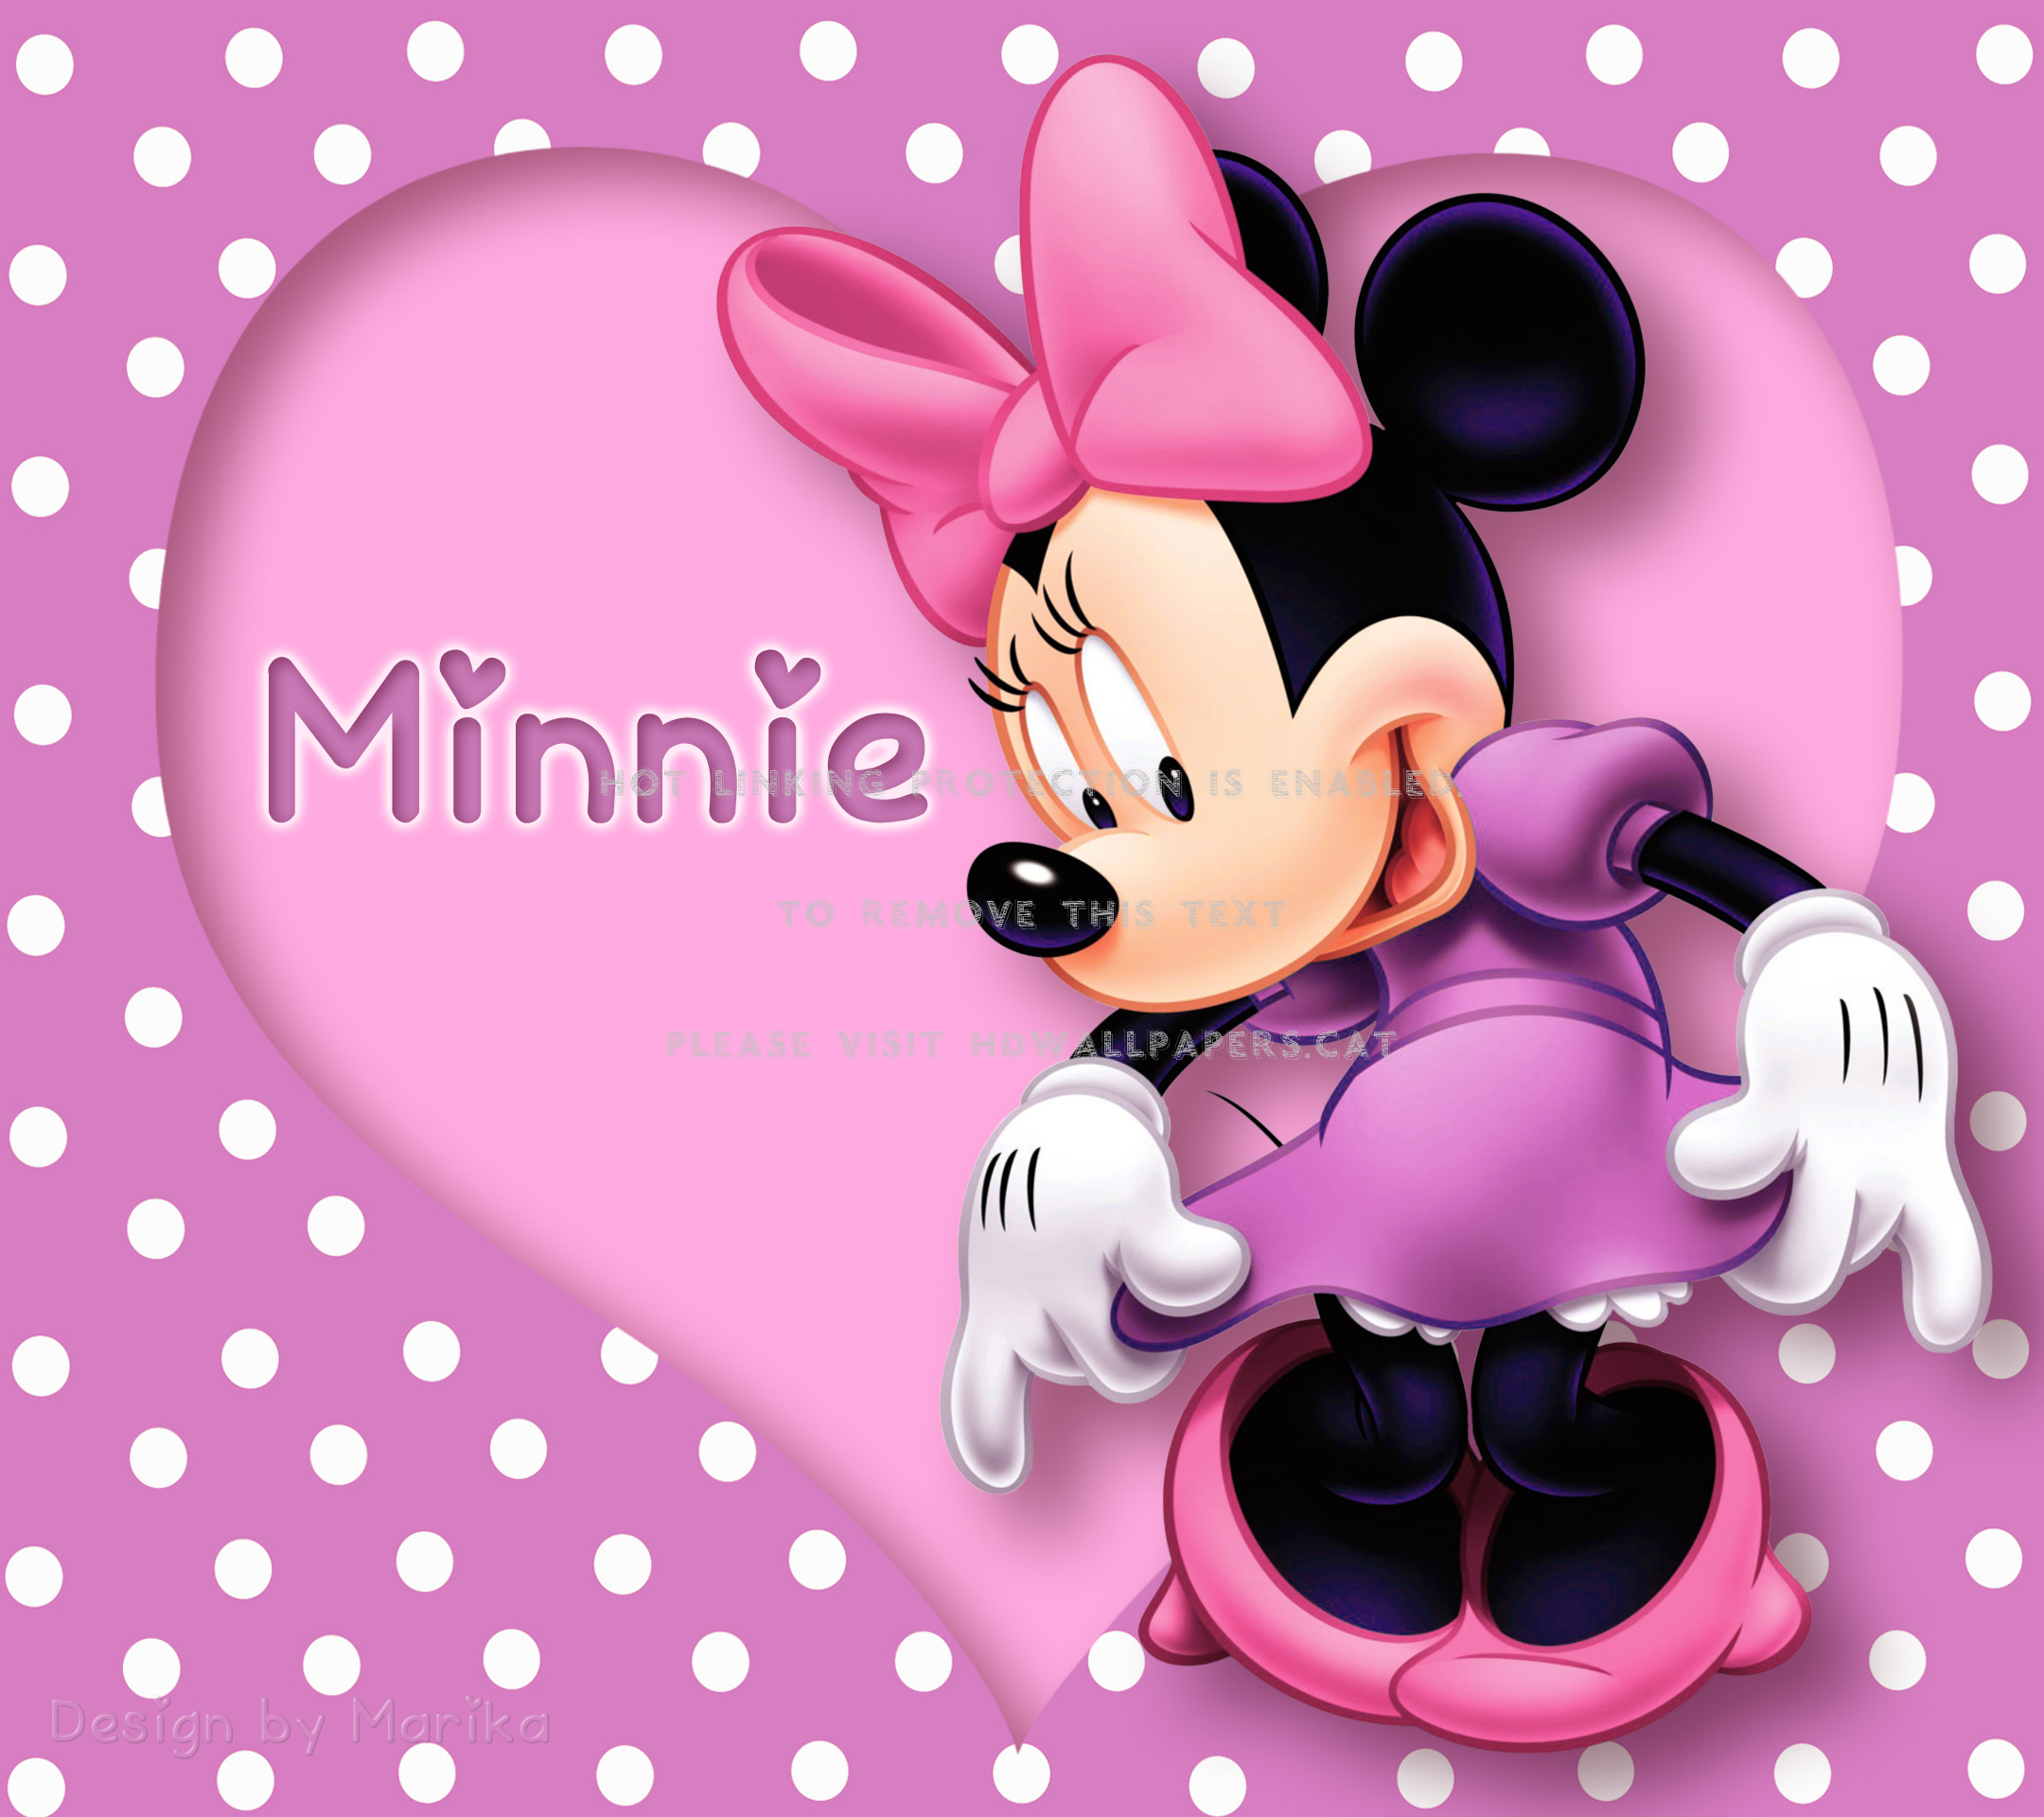 Minnie Heart Purple Disney Cute Polka Dots - Minnie Mouse (life Size Stand Up) - HD Wallpaper 